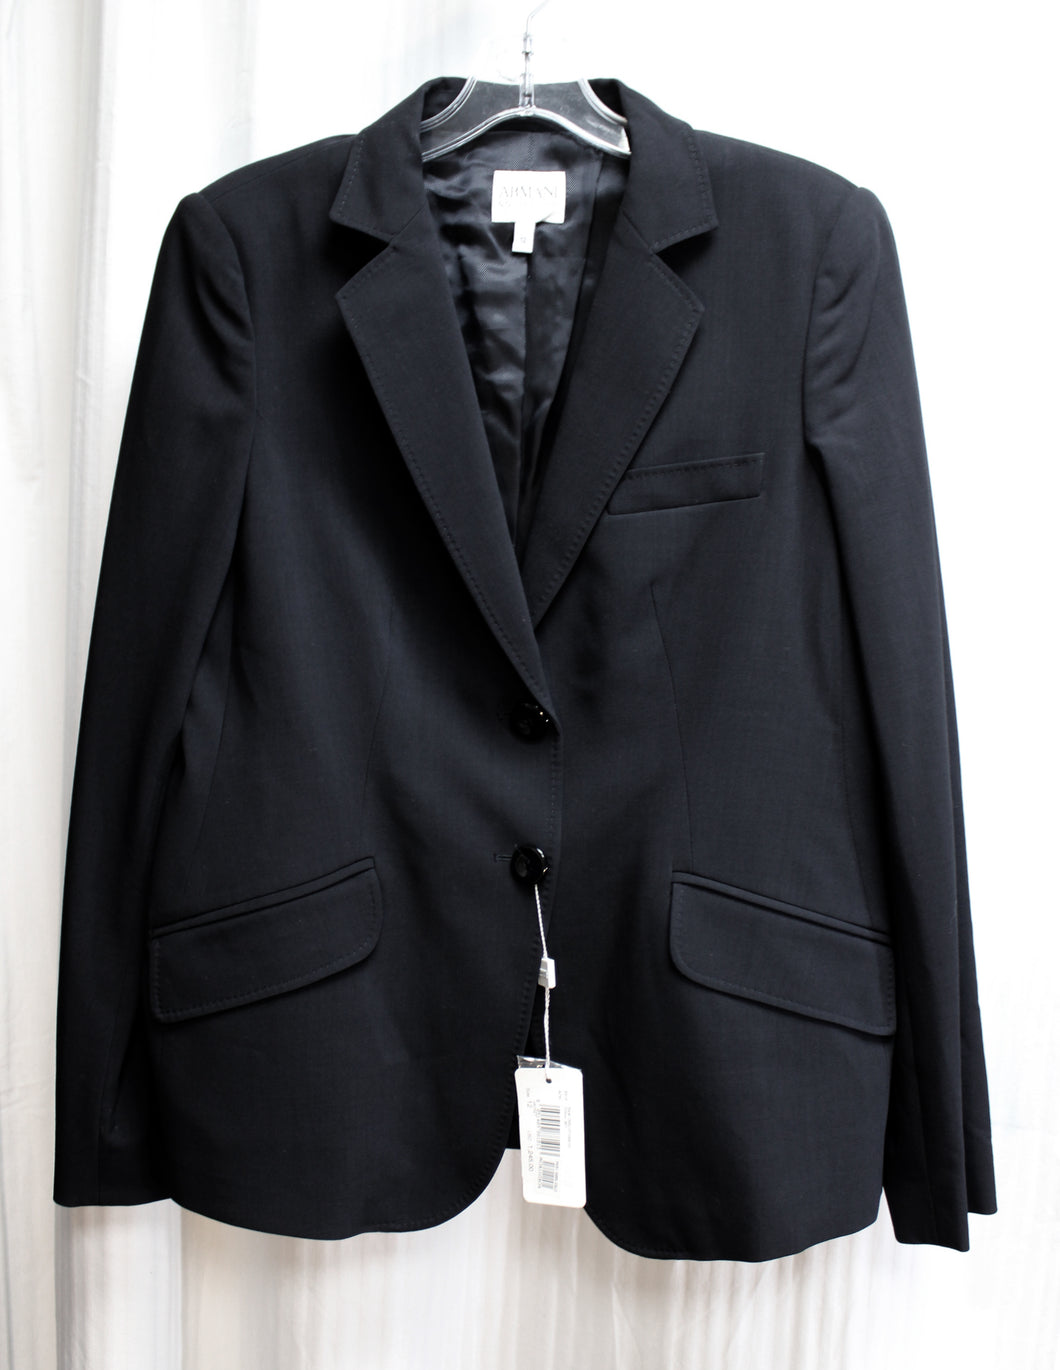 Armani Collezione - Light Weight Virgin Wool Black 2 Button Blazer Jacket- Size 12 w/ Tags